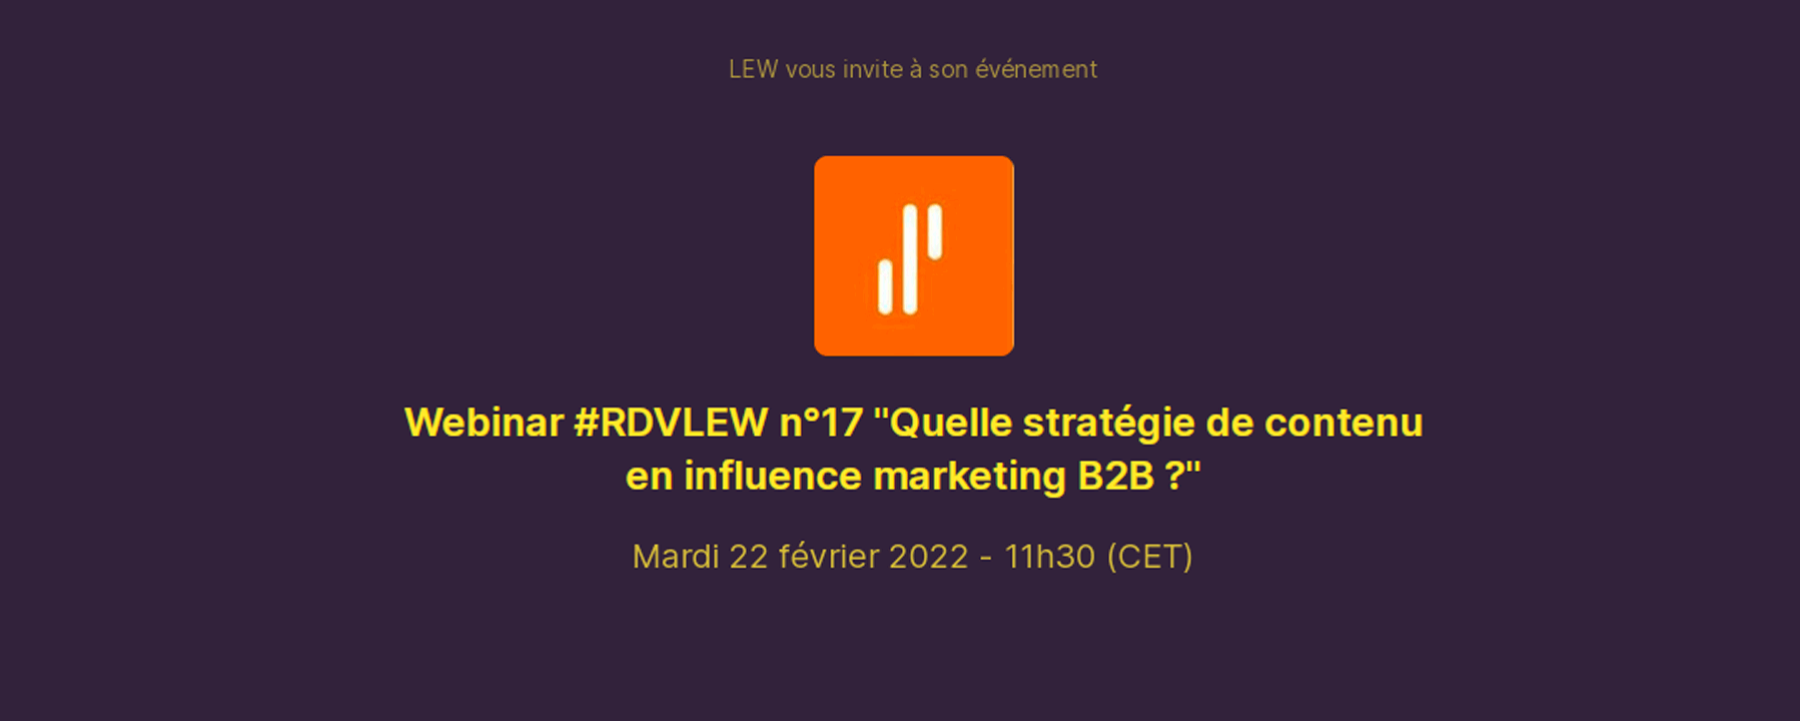 Webinar #RDVLEW n°17 "Quelle stratégie de contenu en influence marketing B2B ?"